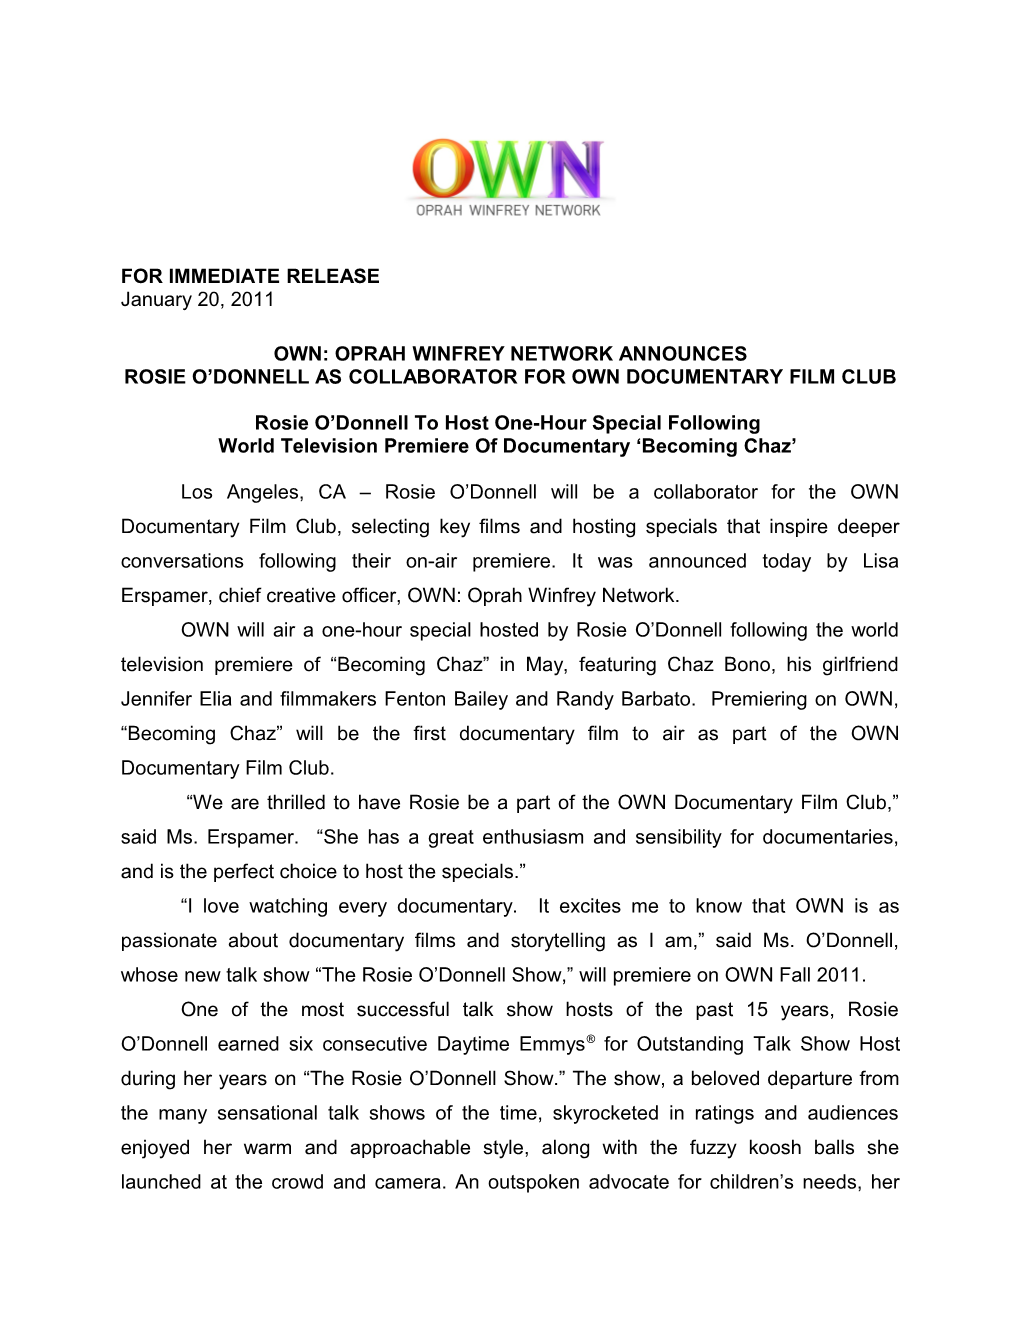 Own: Oprah Winfrey Network Announces